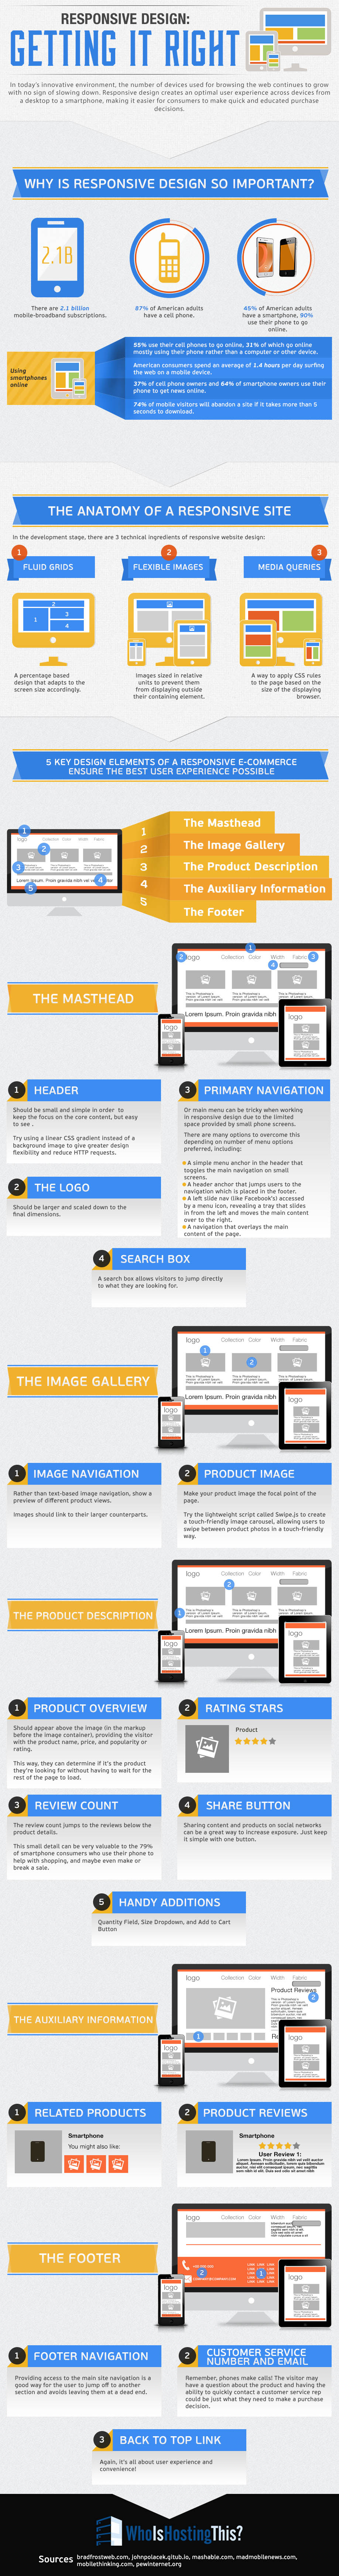 infographic-responsive-design-600